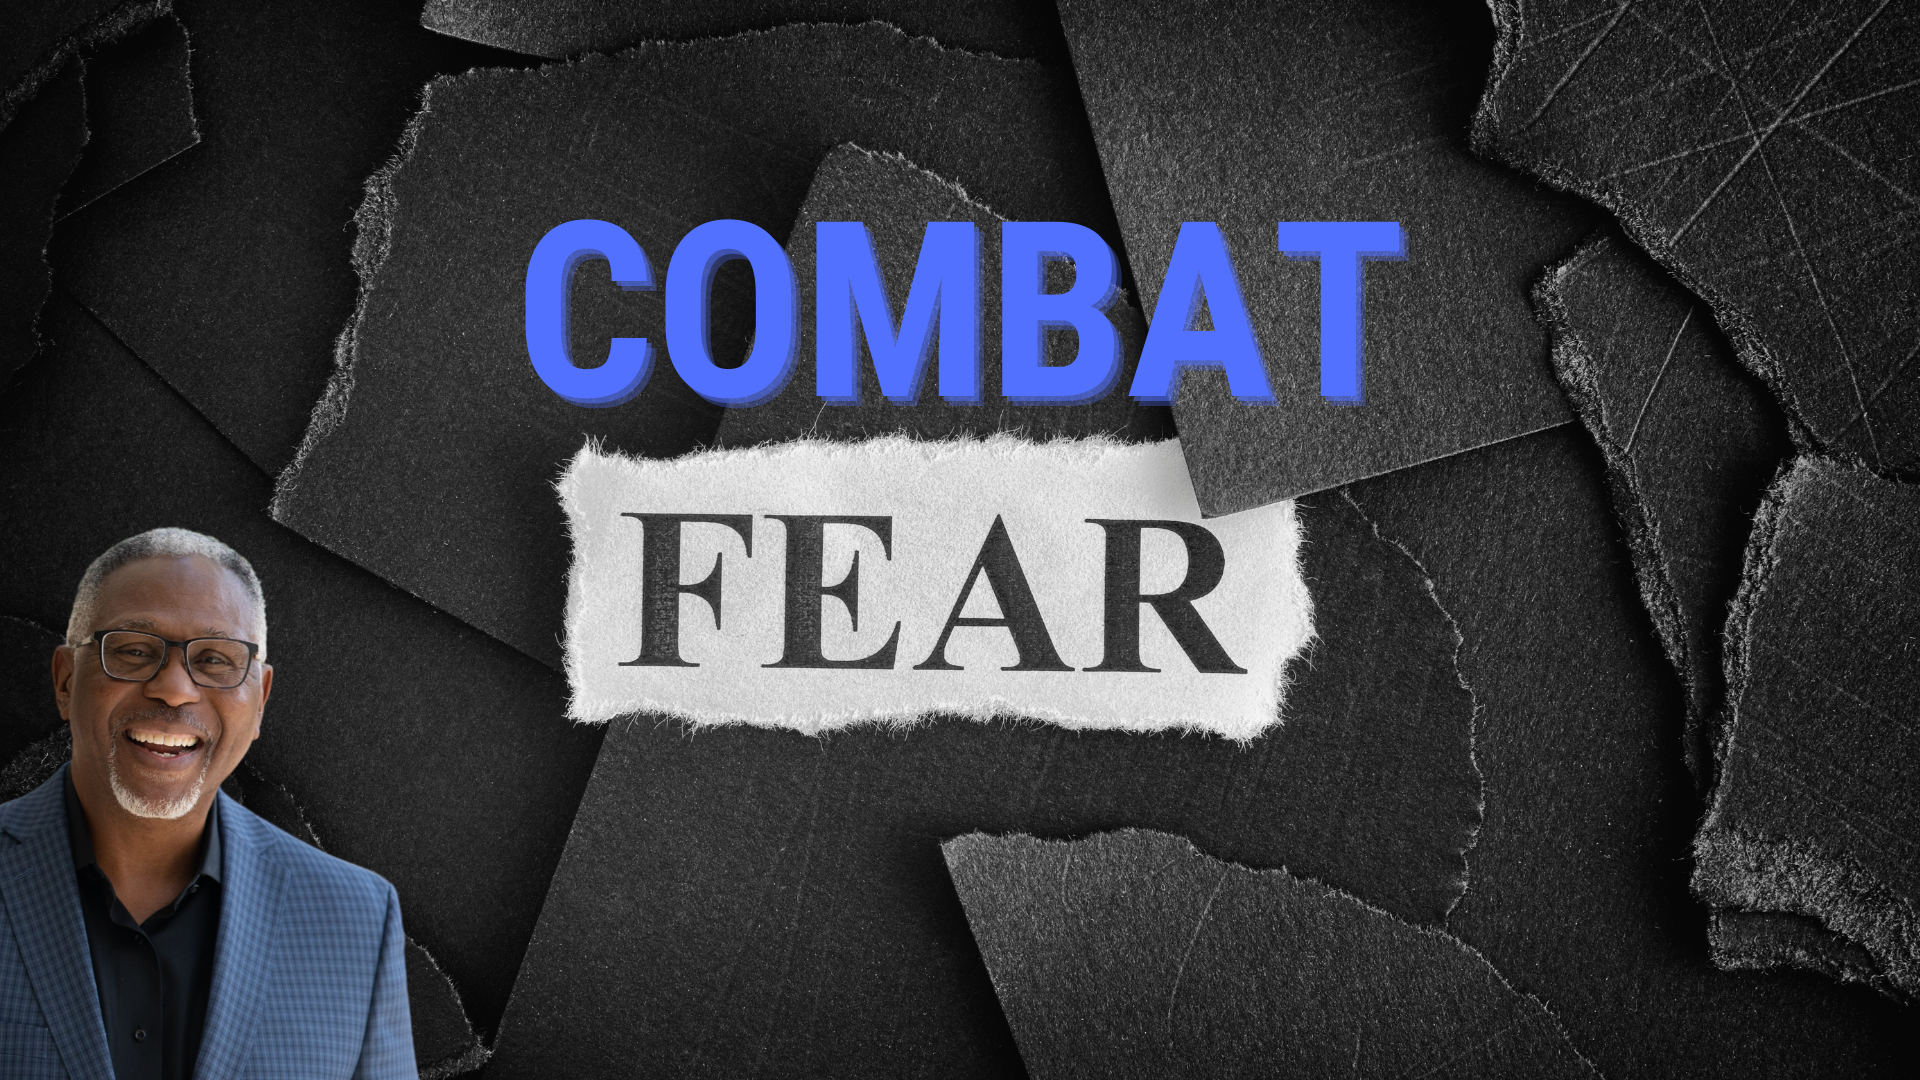 Combat Fear